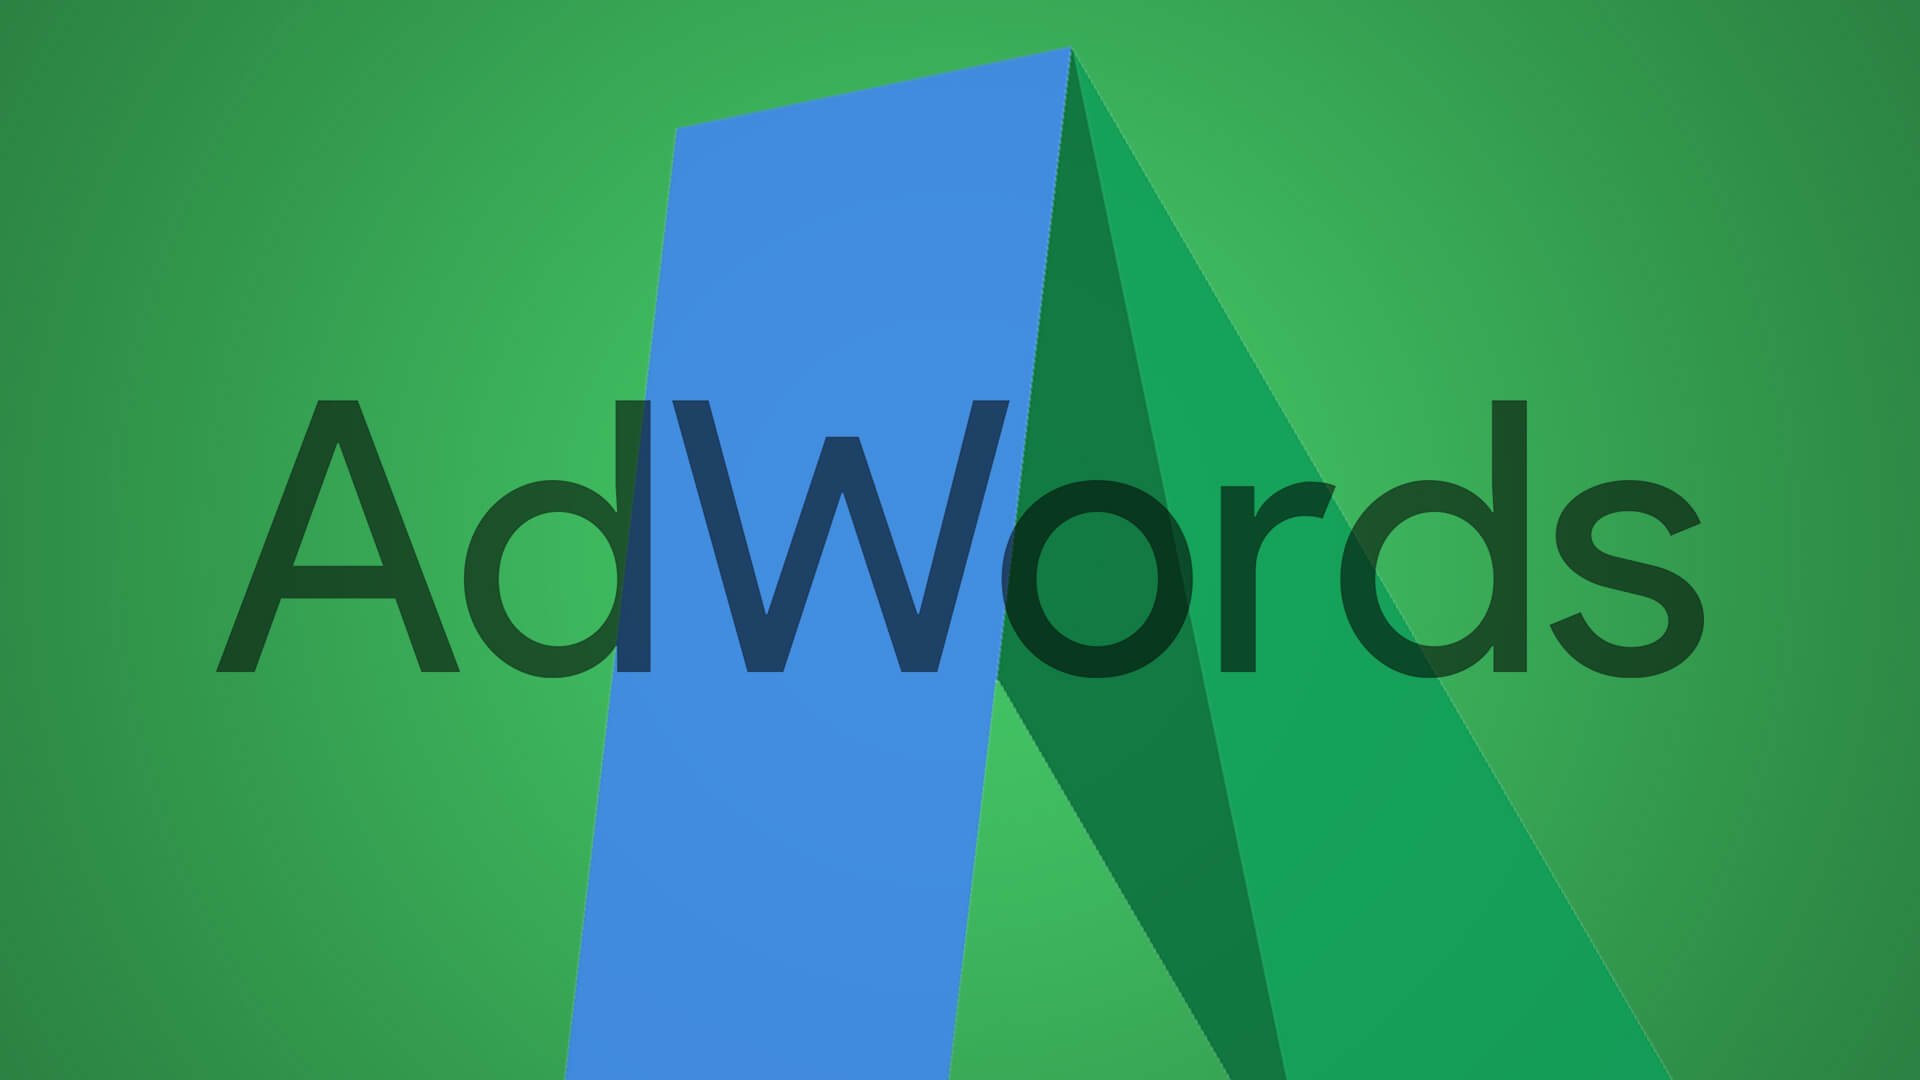 google-adwords-green2-1920